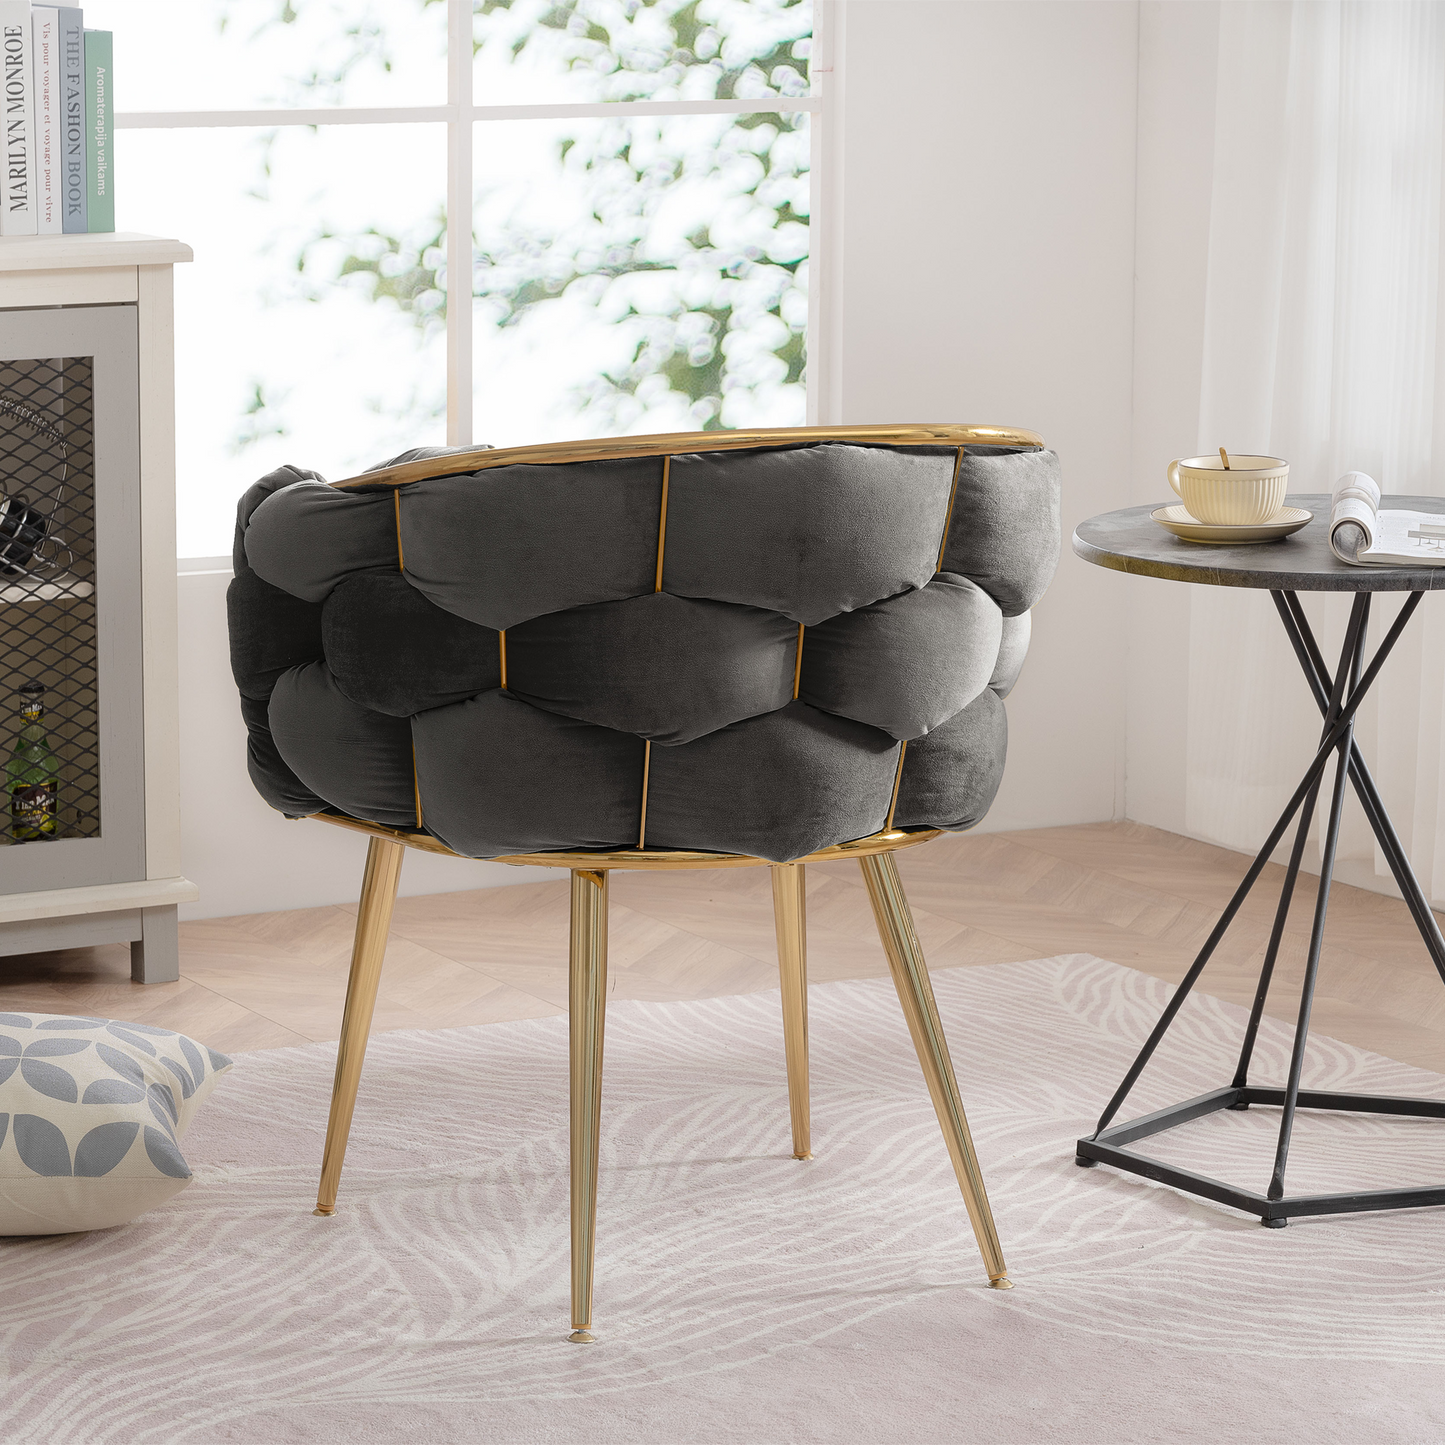 Luxury modern simple leisure velvet single sofa chair bedroom lazy person household dresser stool manicure table back chair black